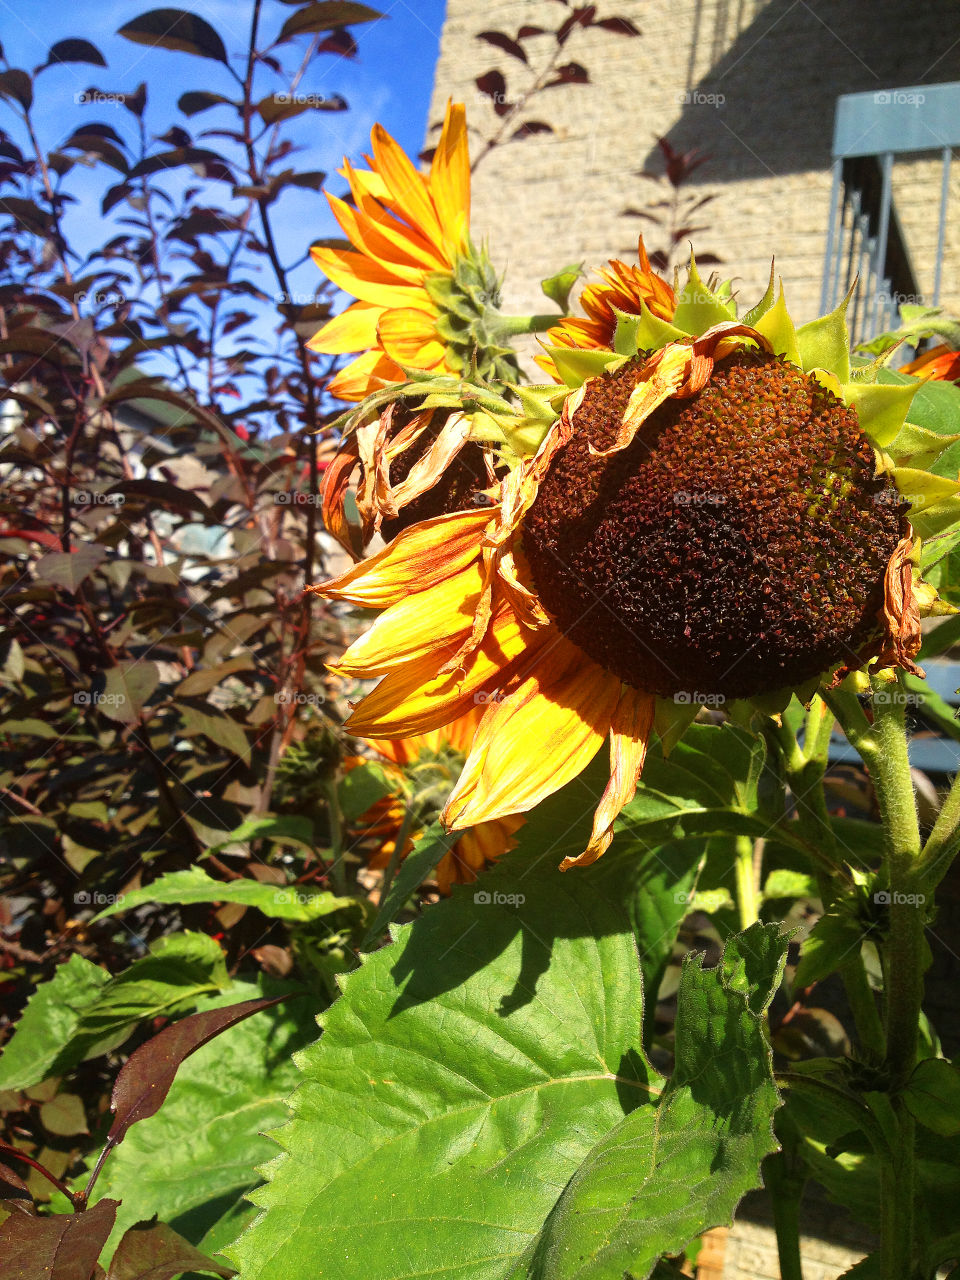 Giant Sunflowers in garden 